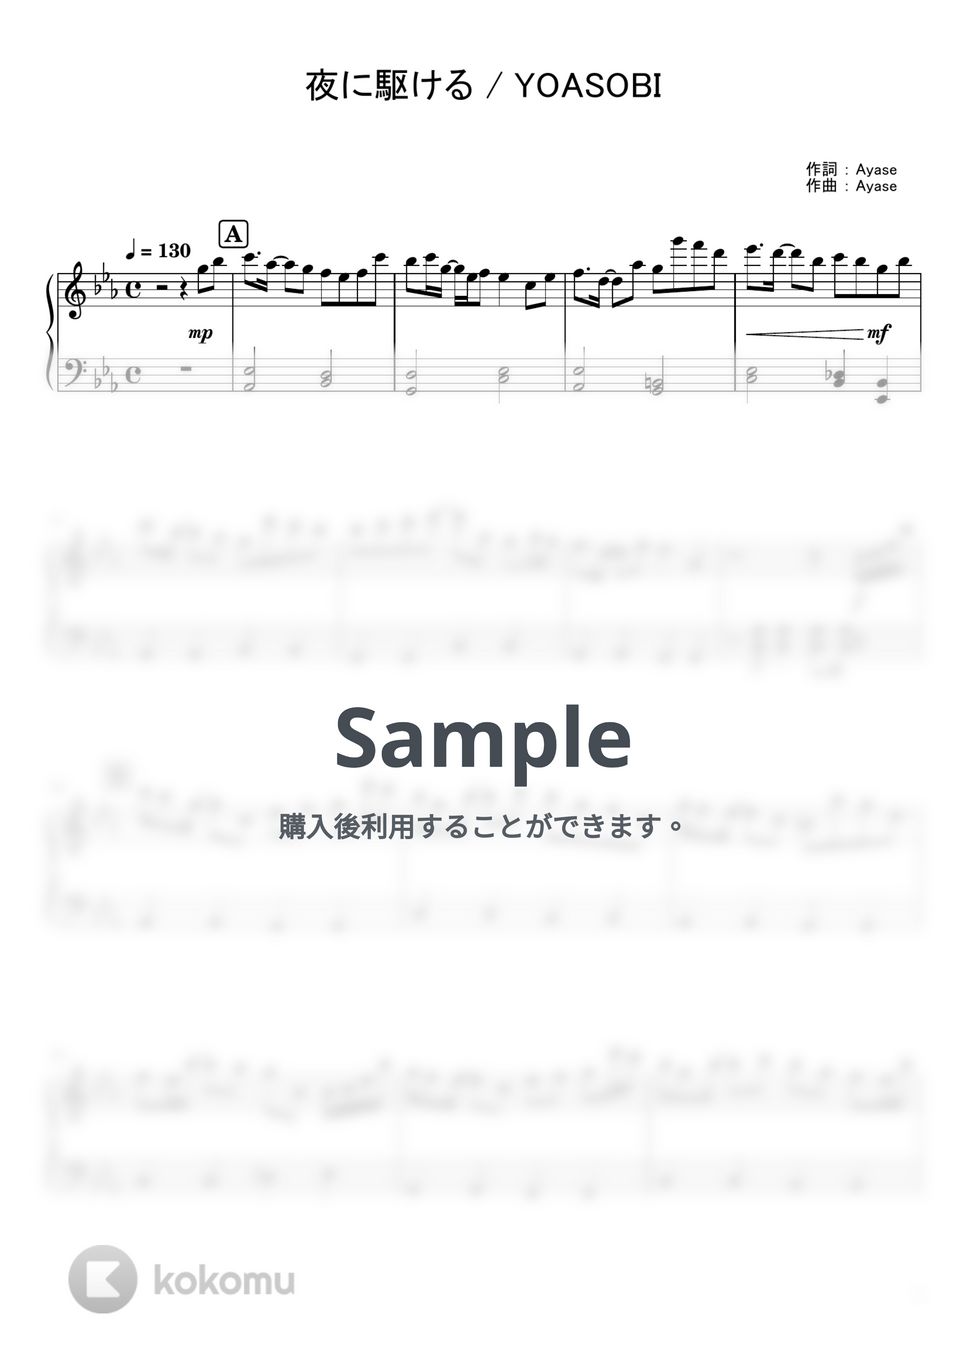 YOASOBI - 夜に駆ける (ピアノ 楽譜) by ITO